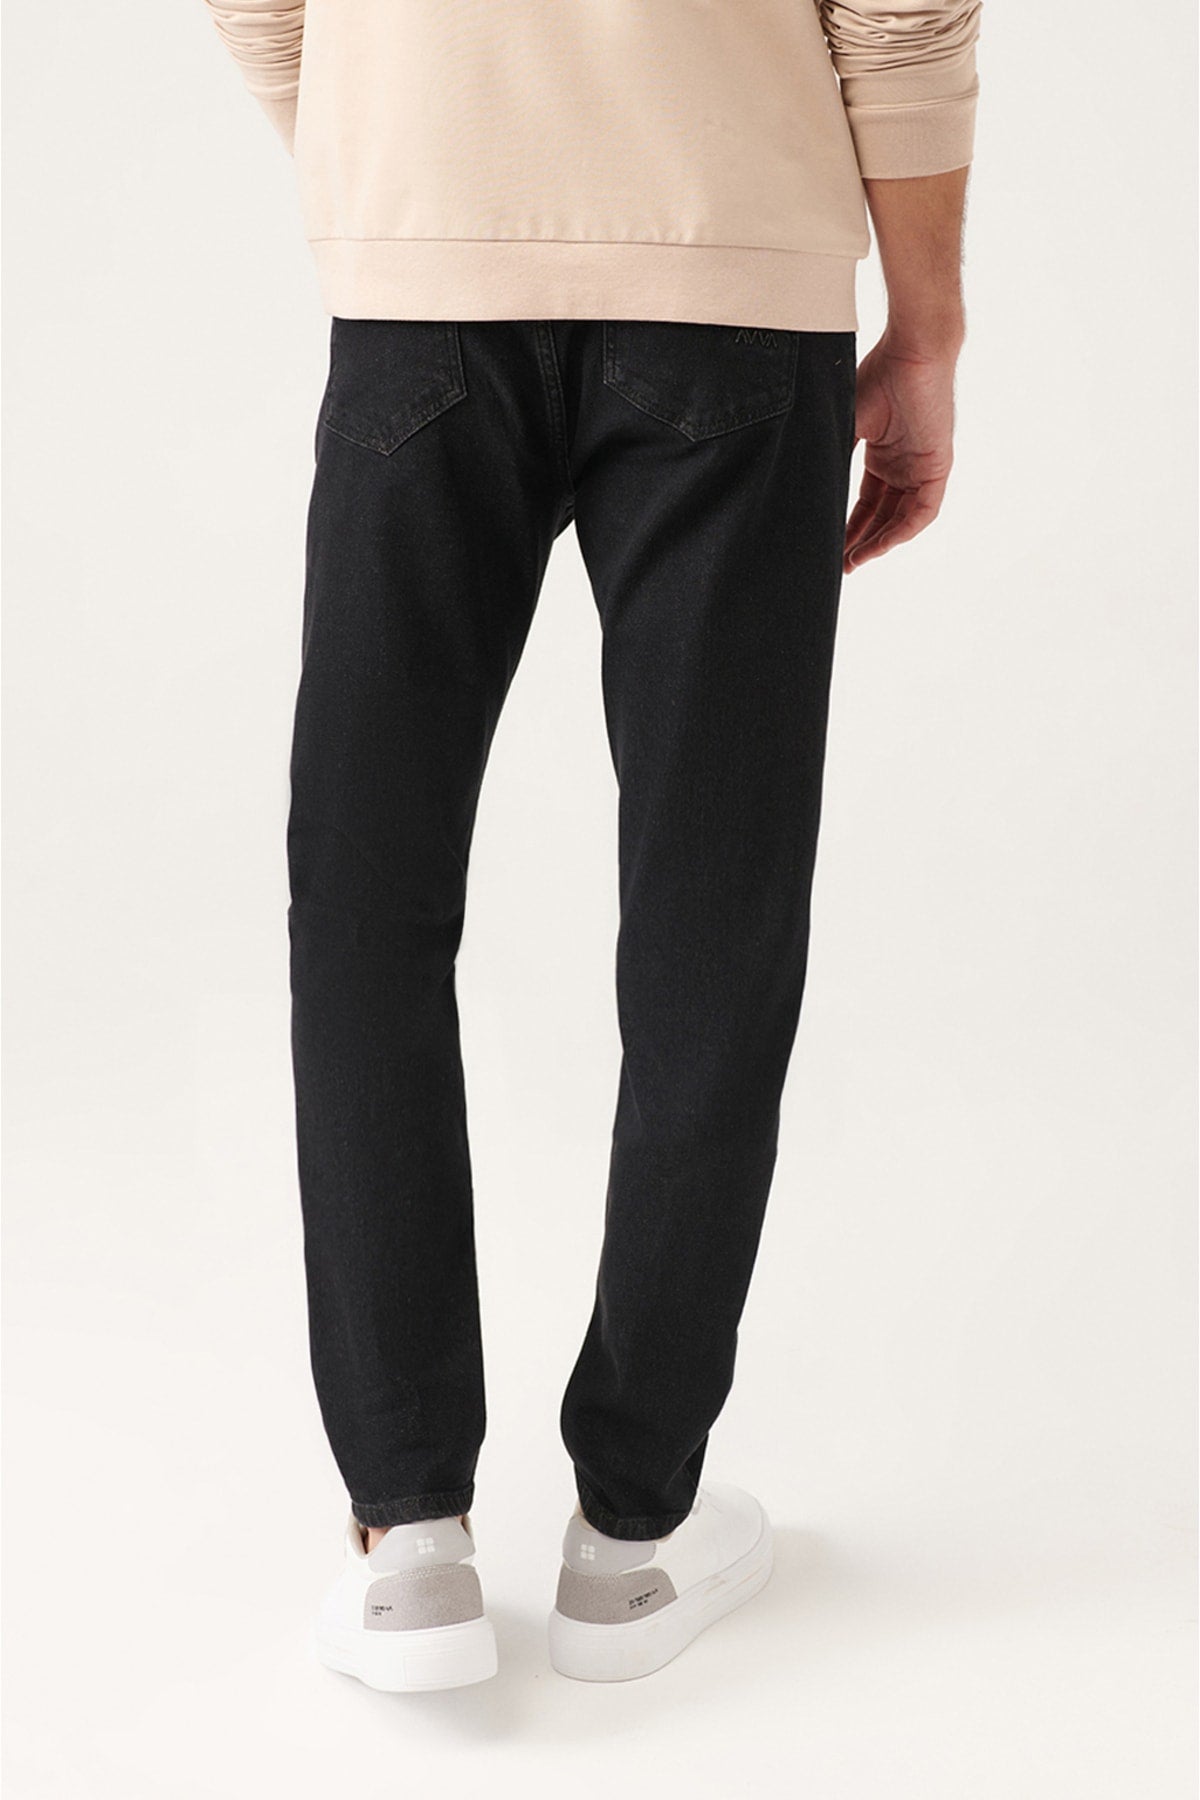 Men's black flat washing lycra jean pants A31y3502